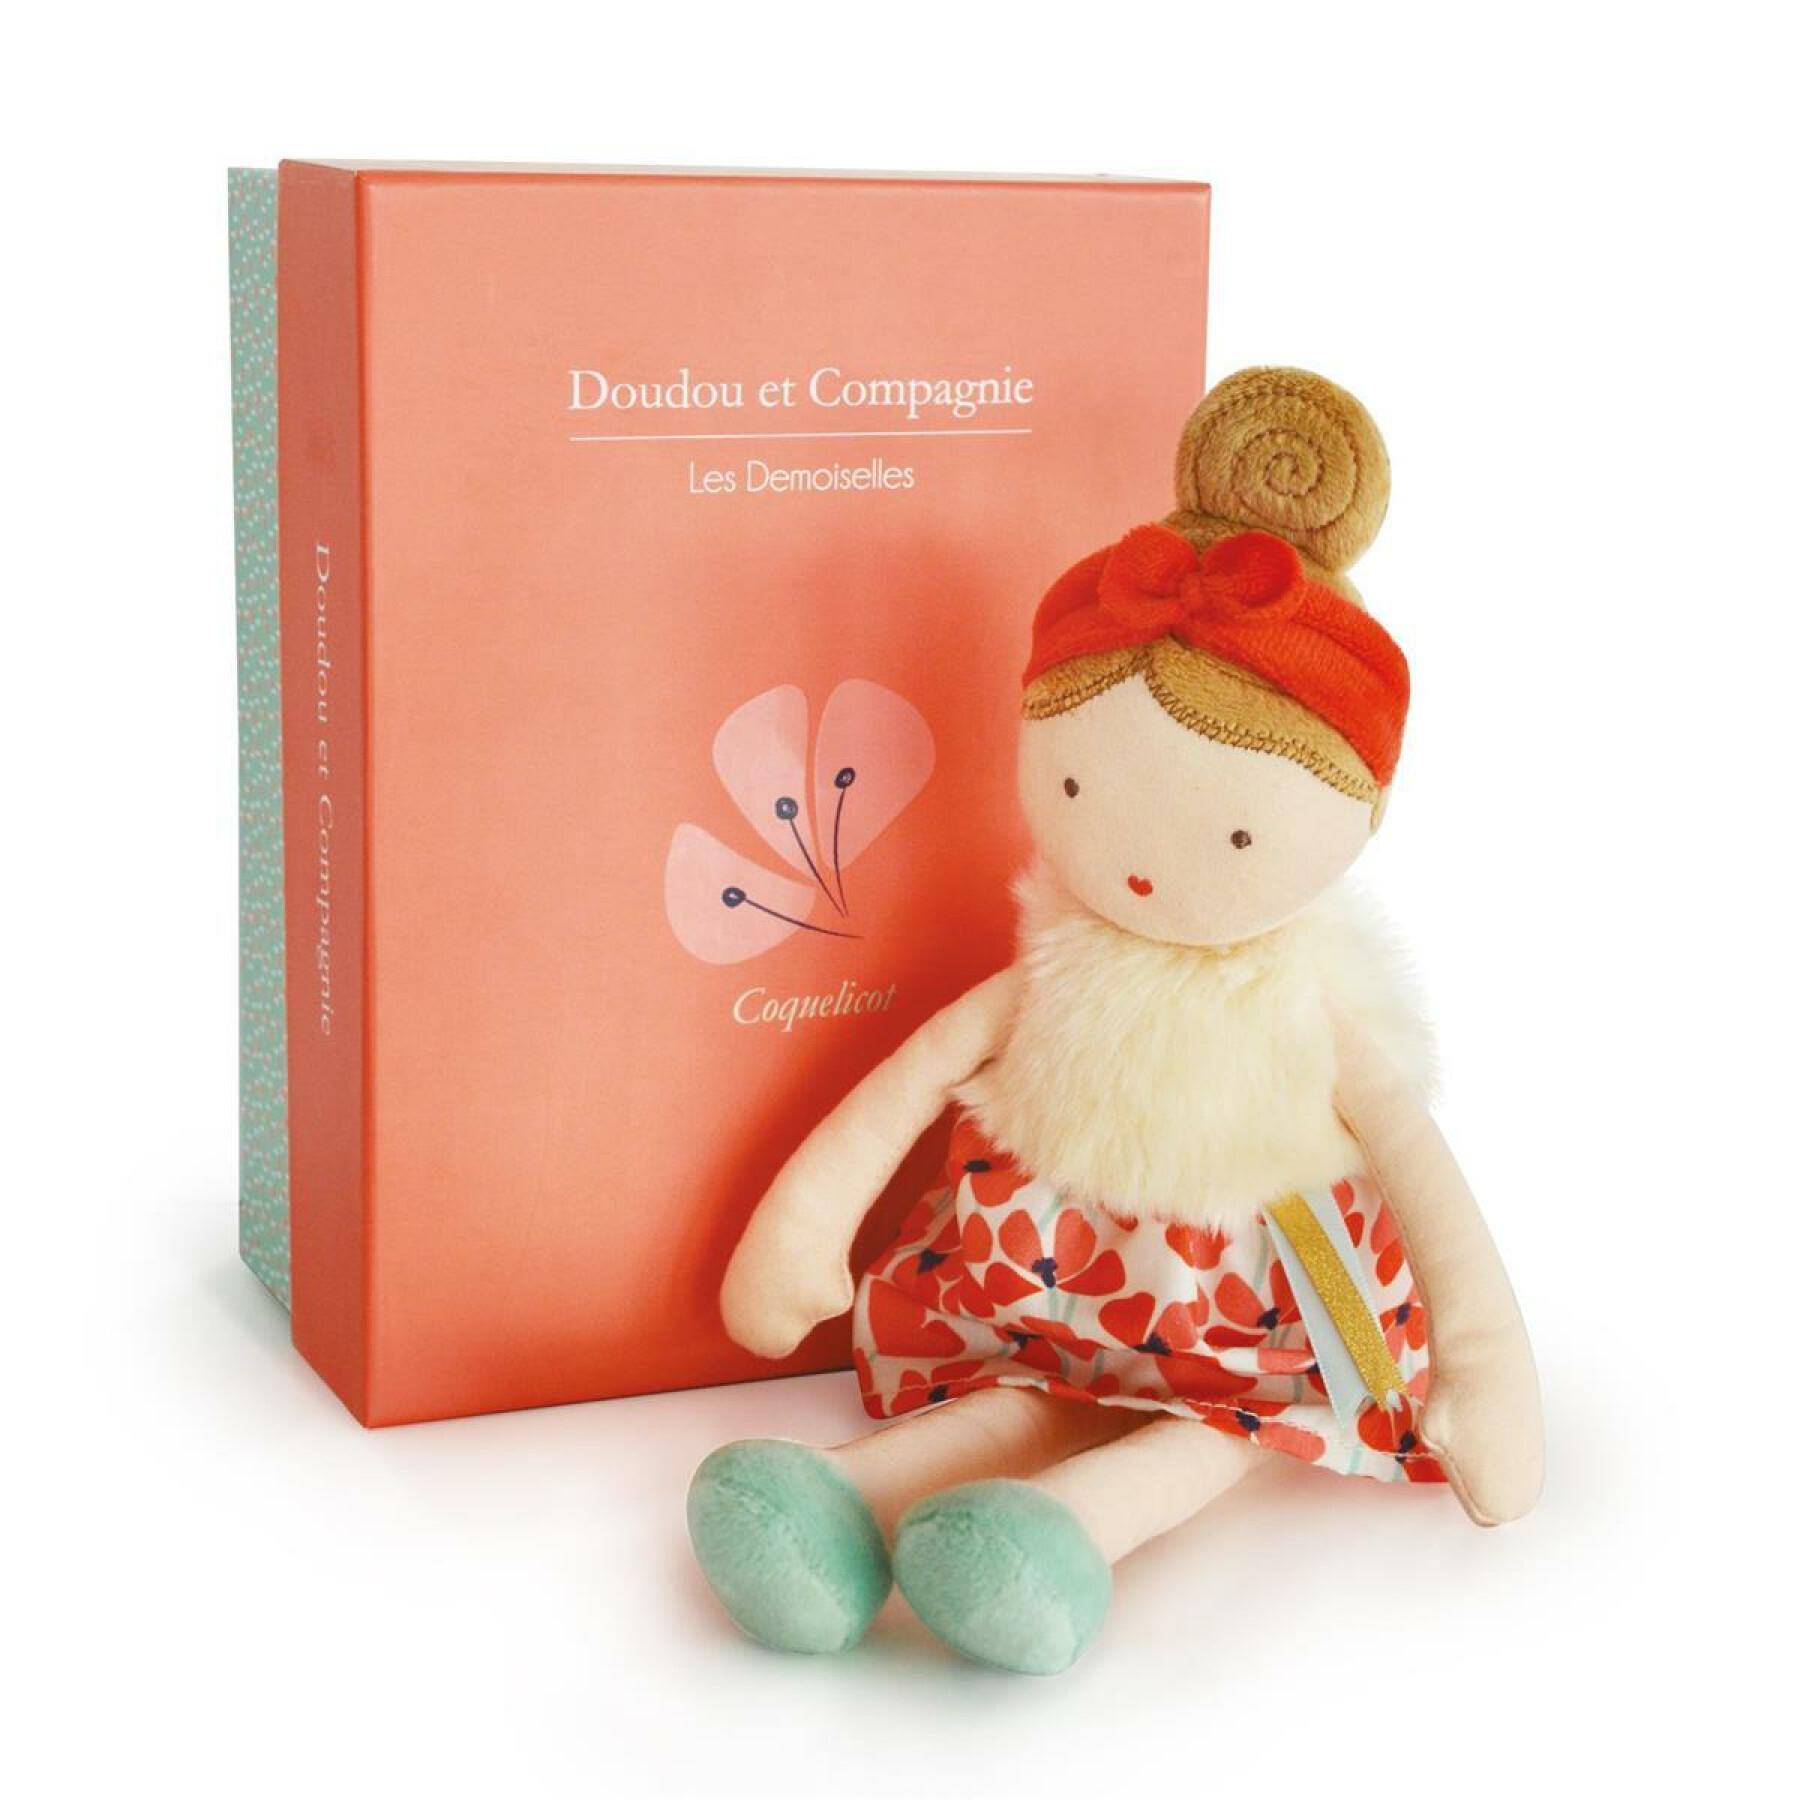 Puppe Doudou & compagnie Demoiselle Coquelicot